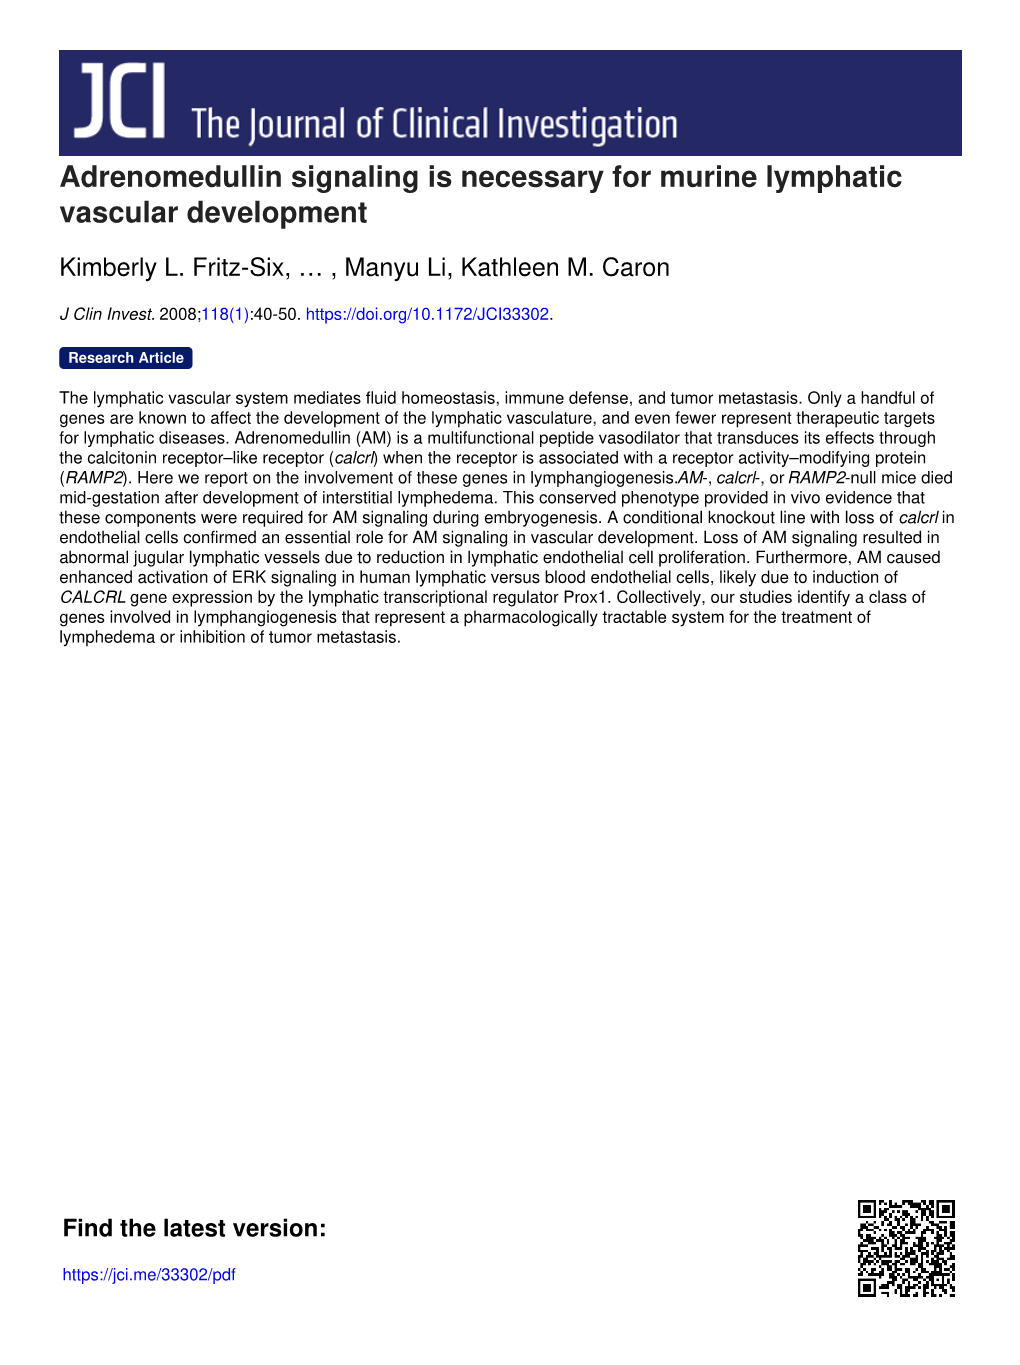 Adrenomedullin Signaling Is Necessary for Murine Lymphatic Vascular Development